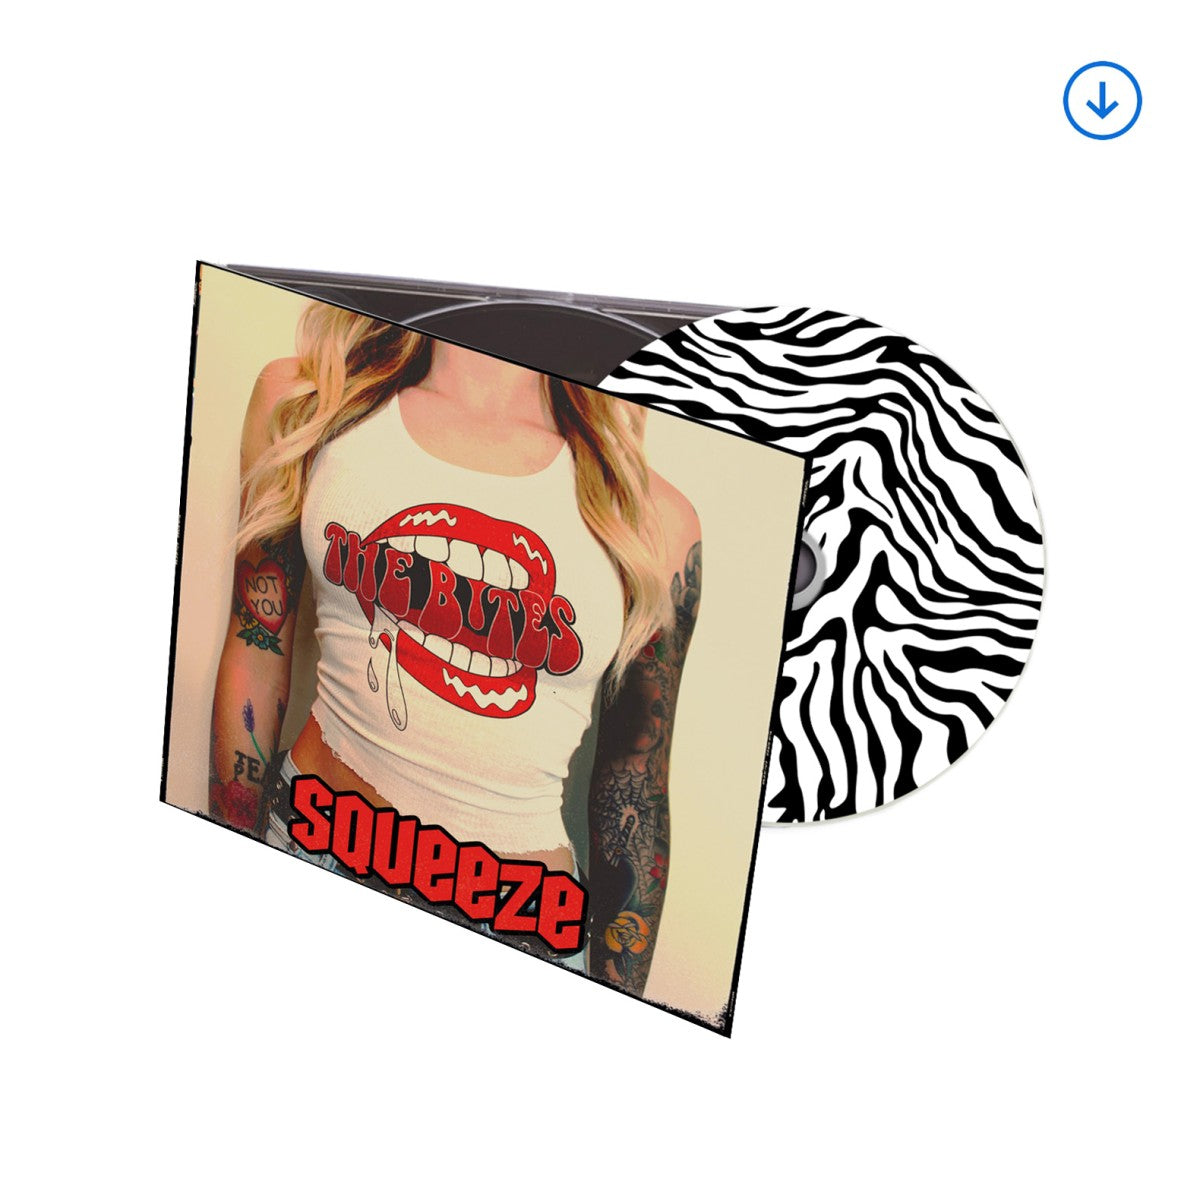 The Bites "Squeeze" Zebra Print CD (50 Copies Only)